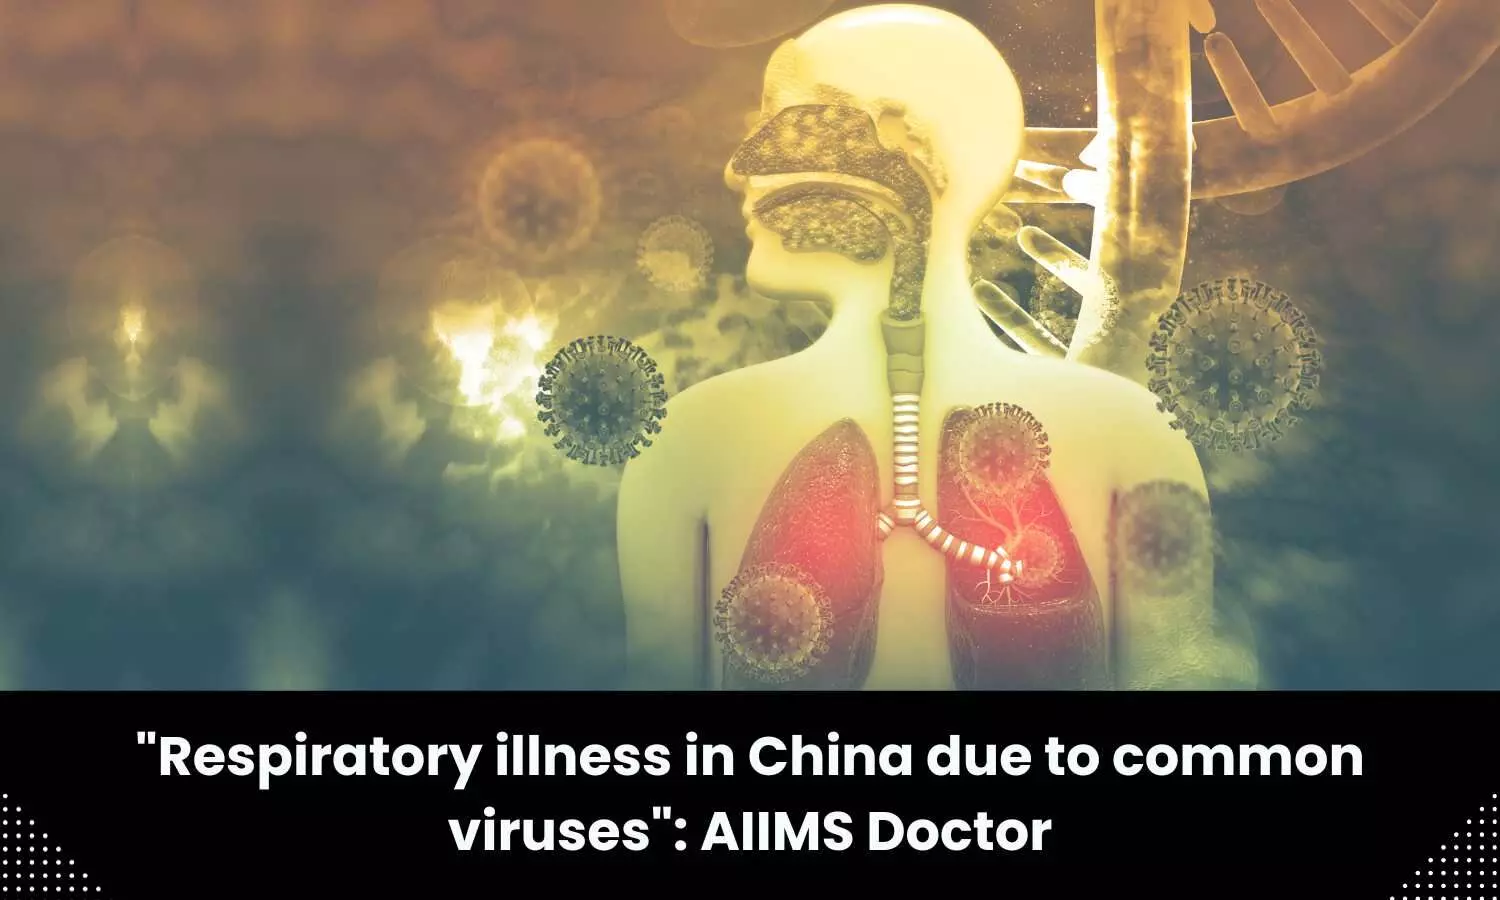 AIIMS doctor clarifies respiratory illness in China due to common viruses